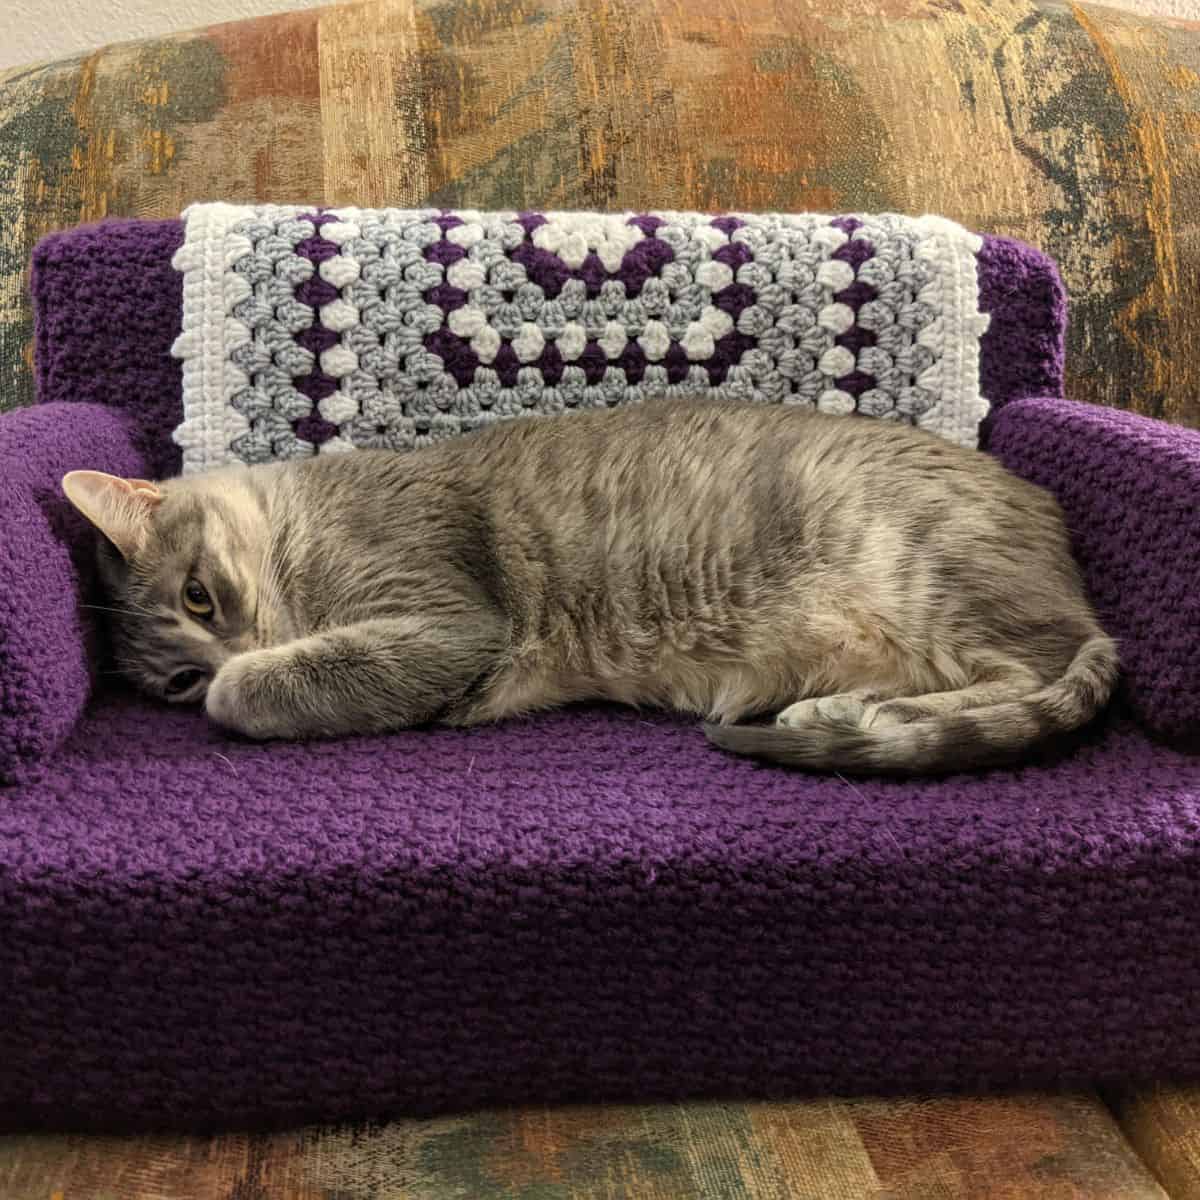 cat relaxing on purple sofa